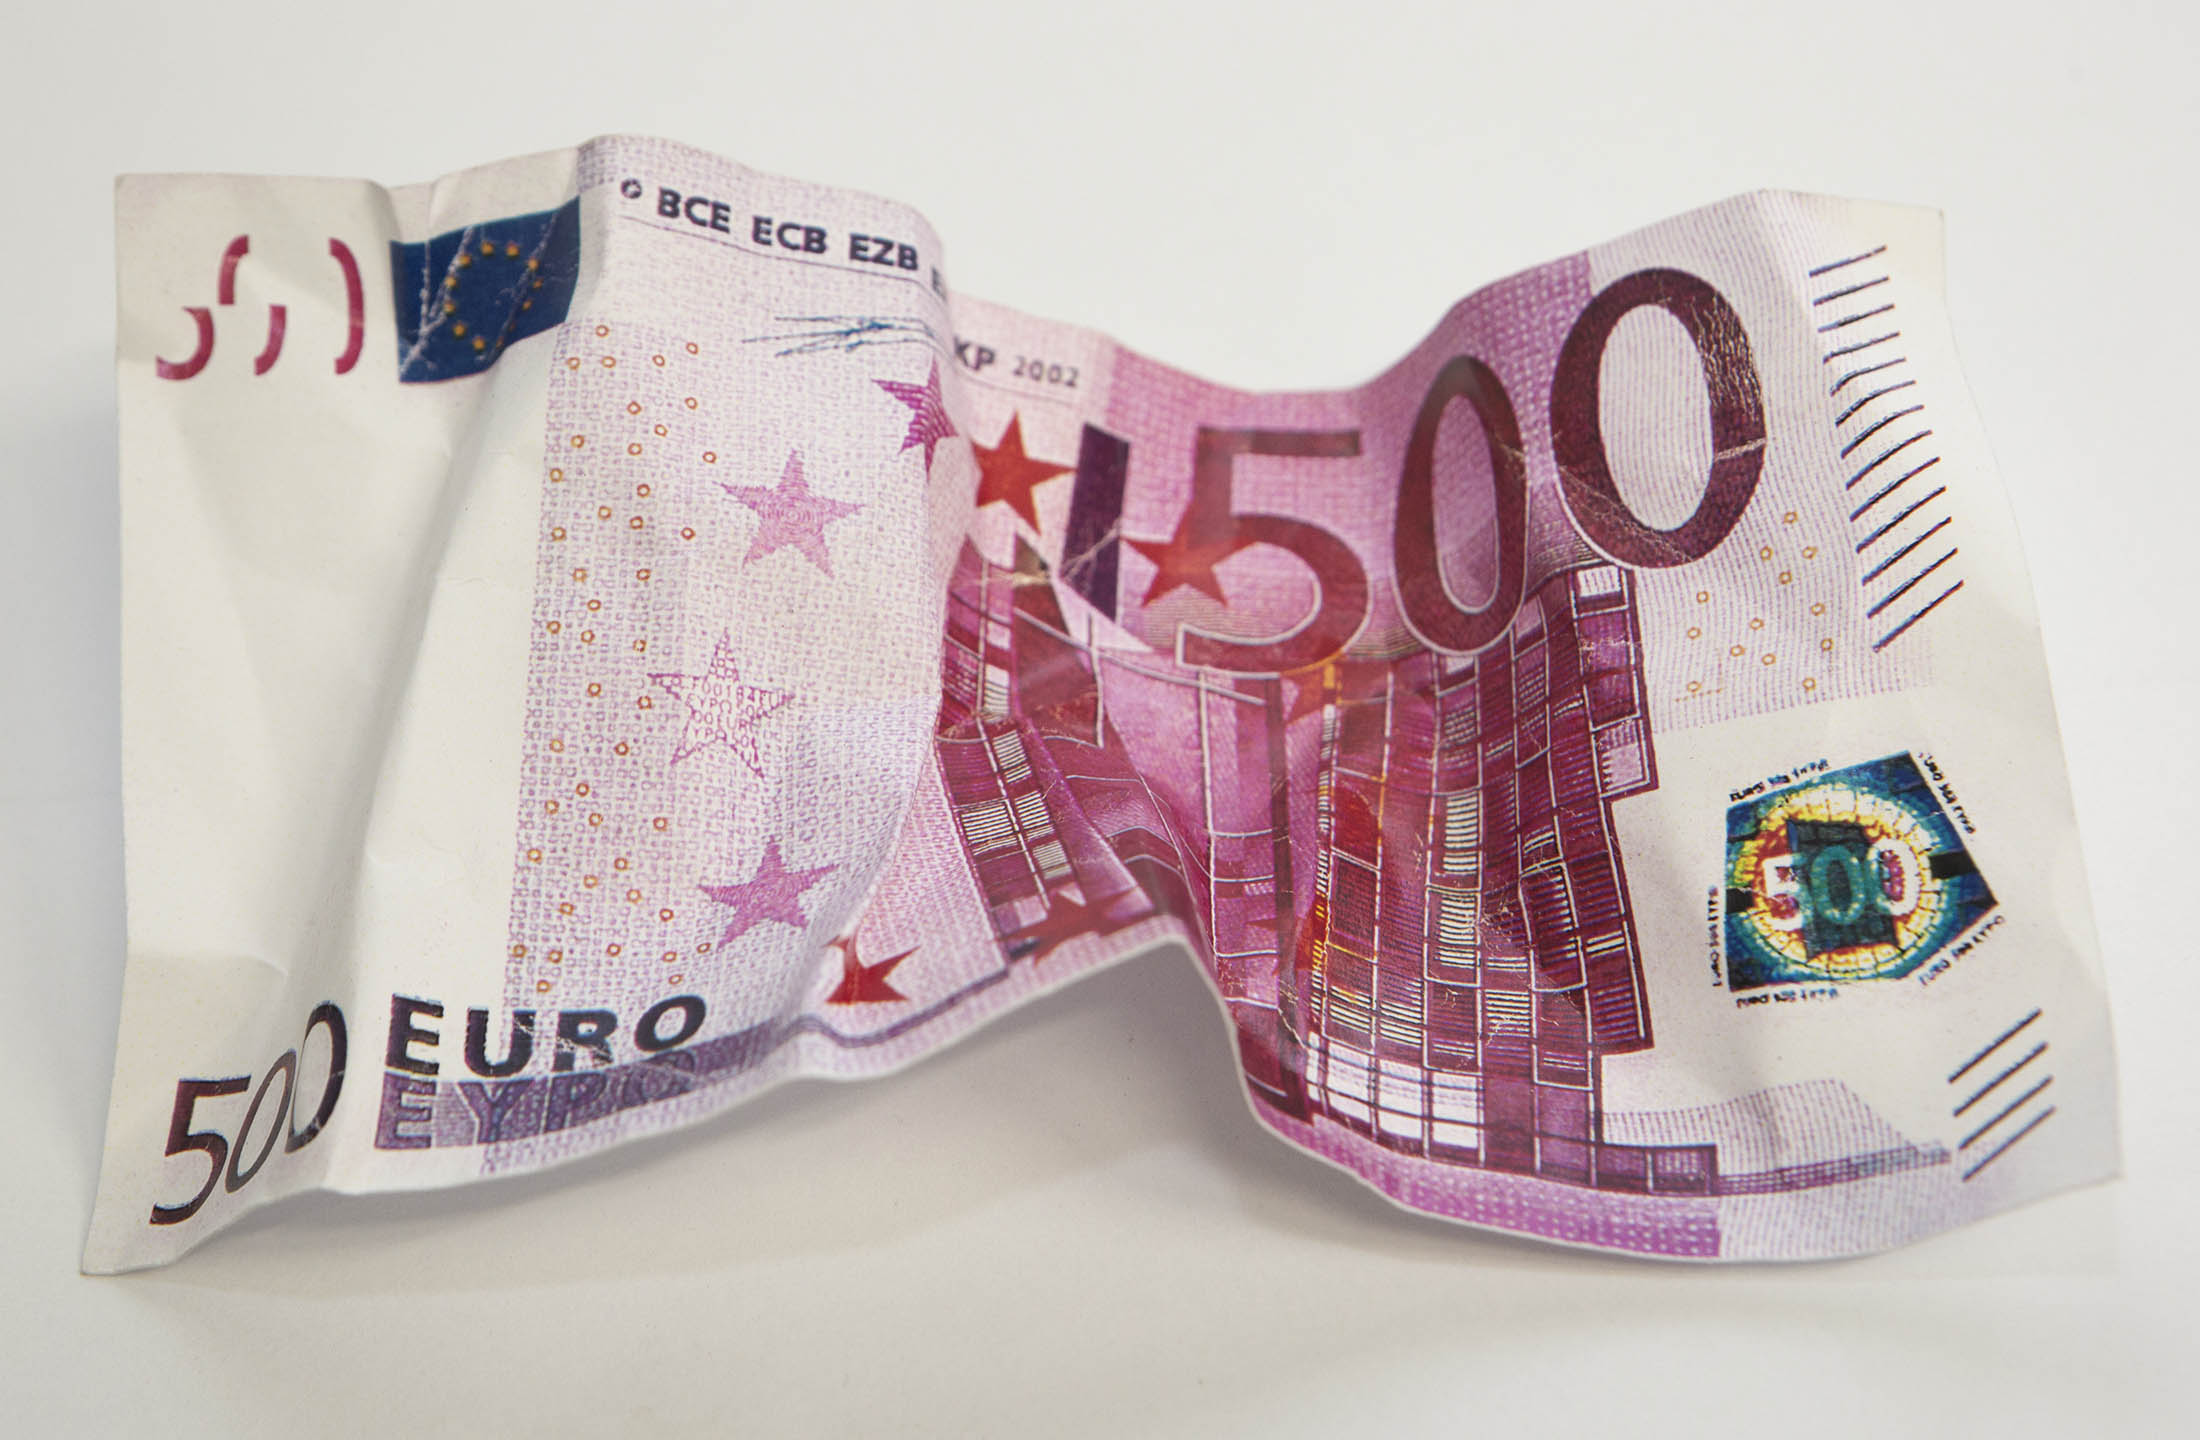 500 euro banknote.
